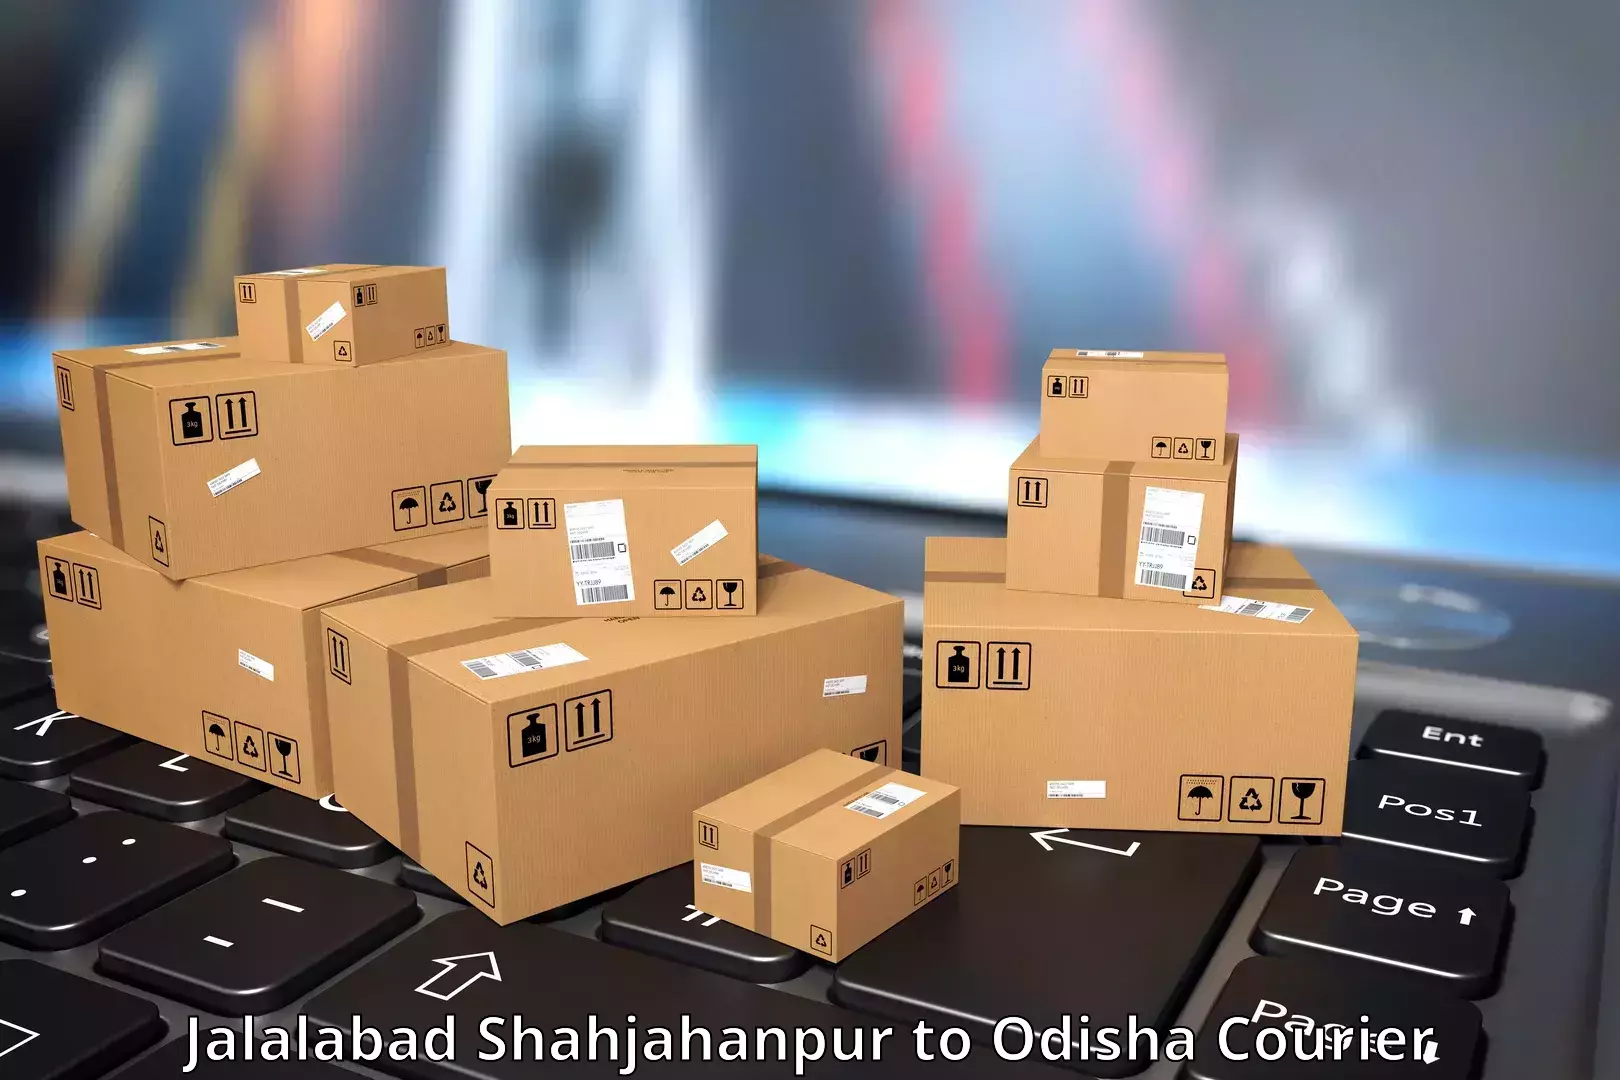 Urgent courier needs Jalalabad Shahjahanpur to Morada